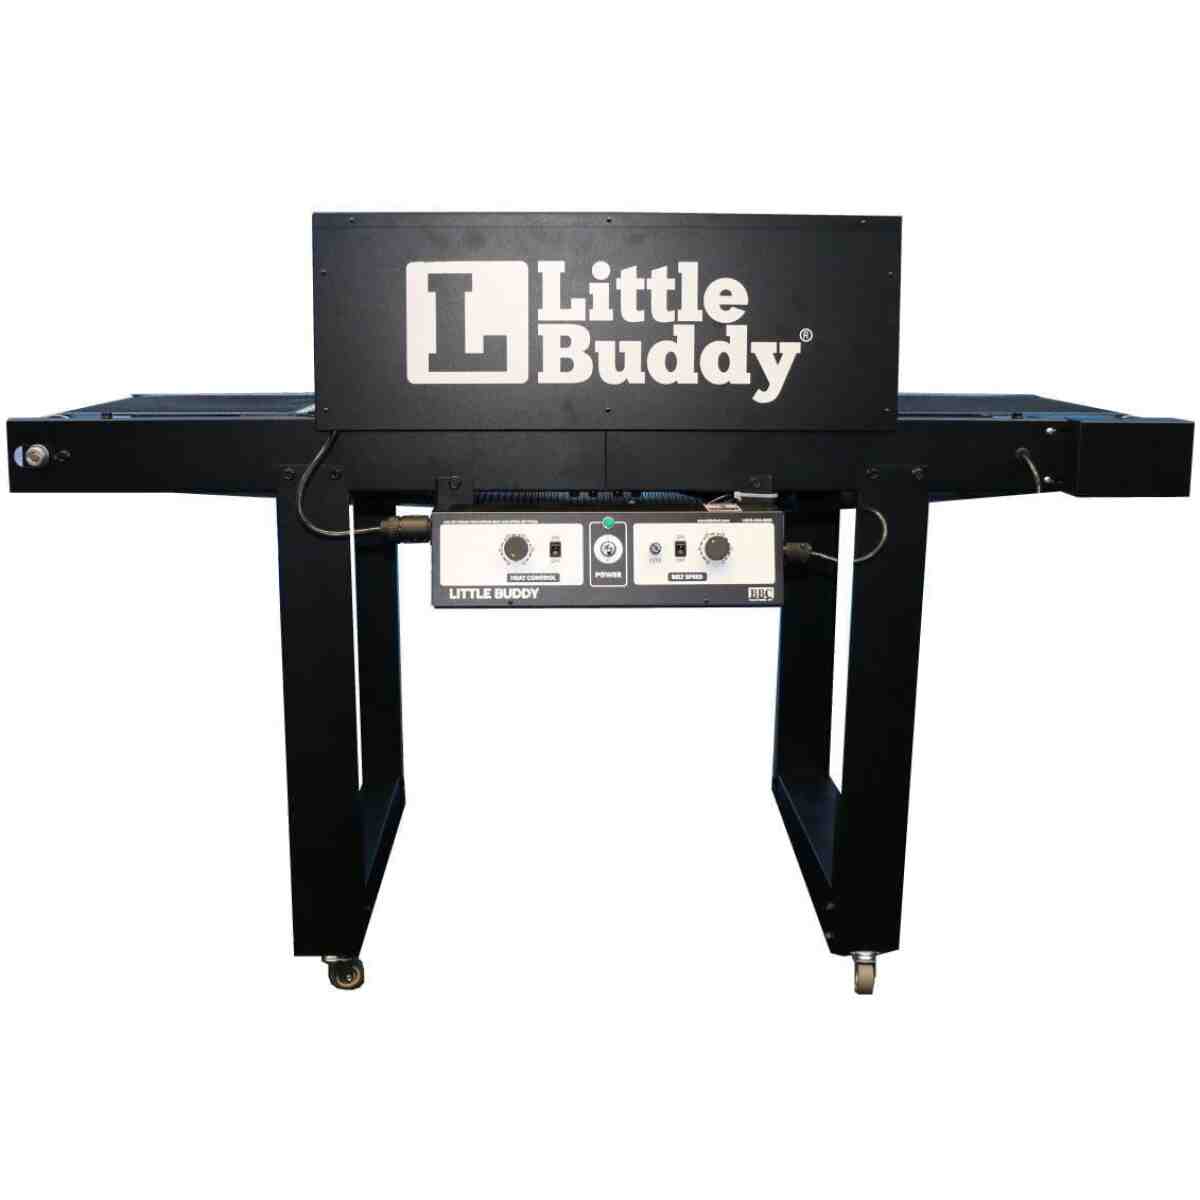 BBC® Little Buddy Conveyor Dryer 24" Belt (240V) BBC®